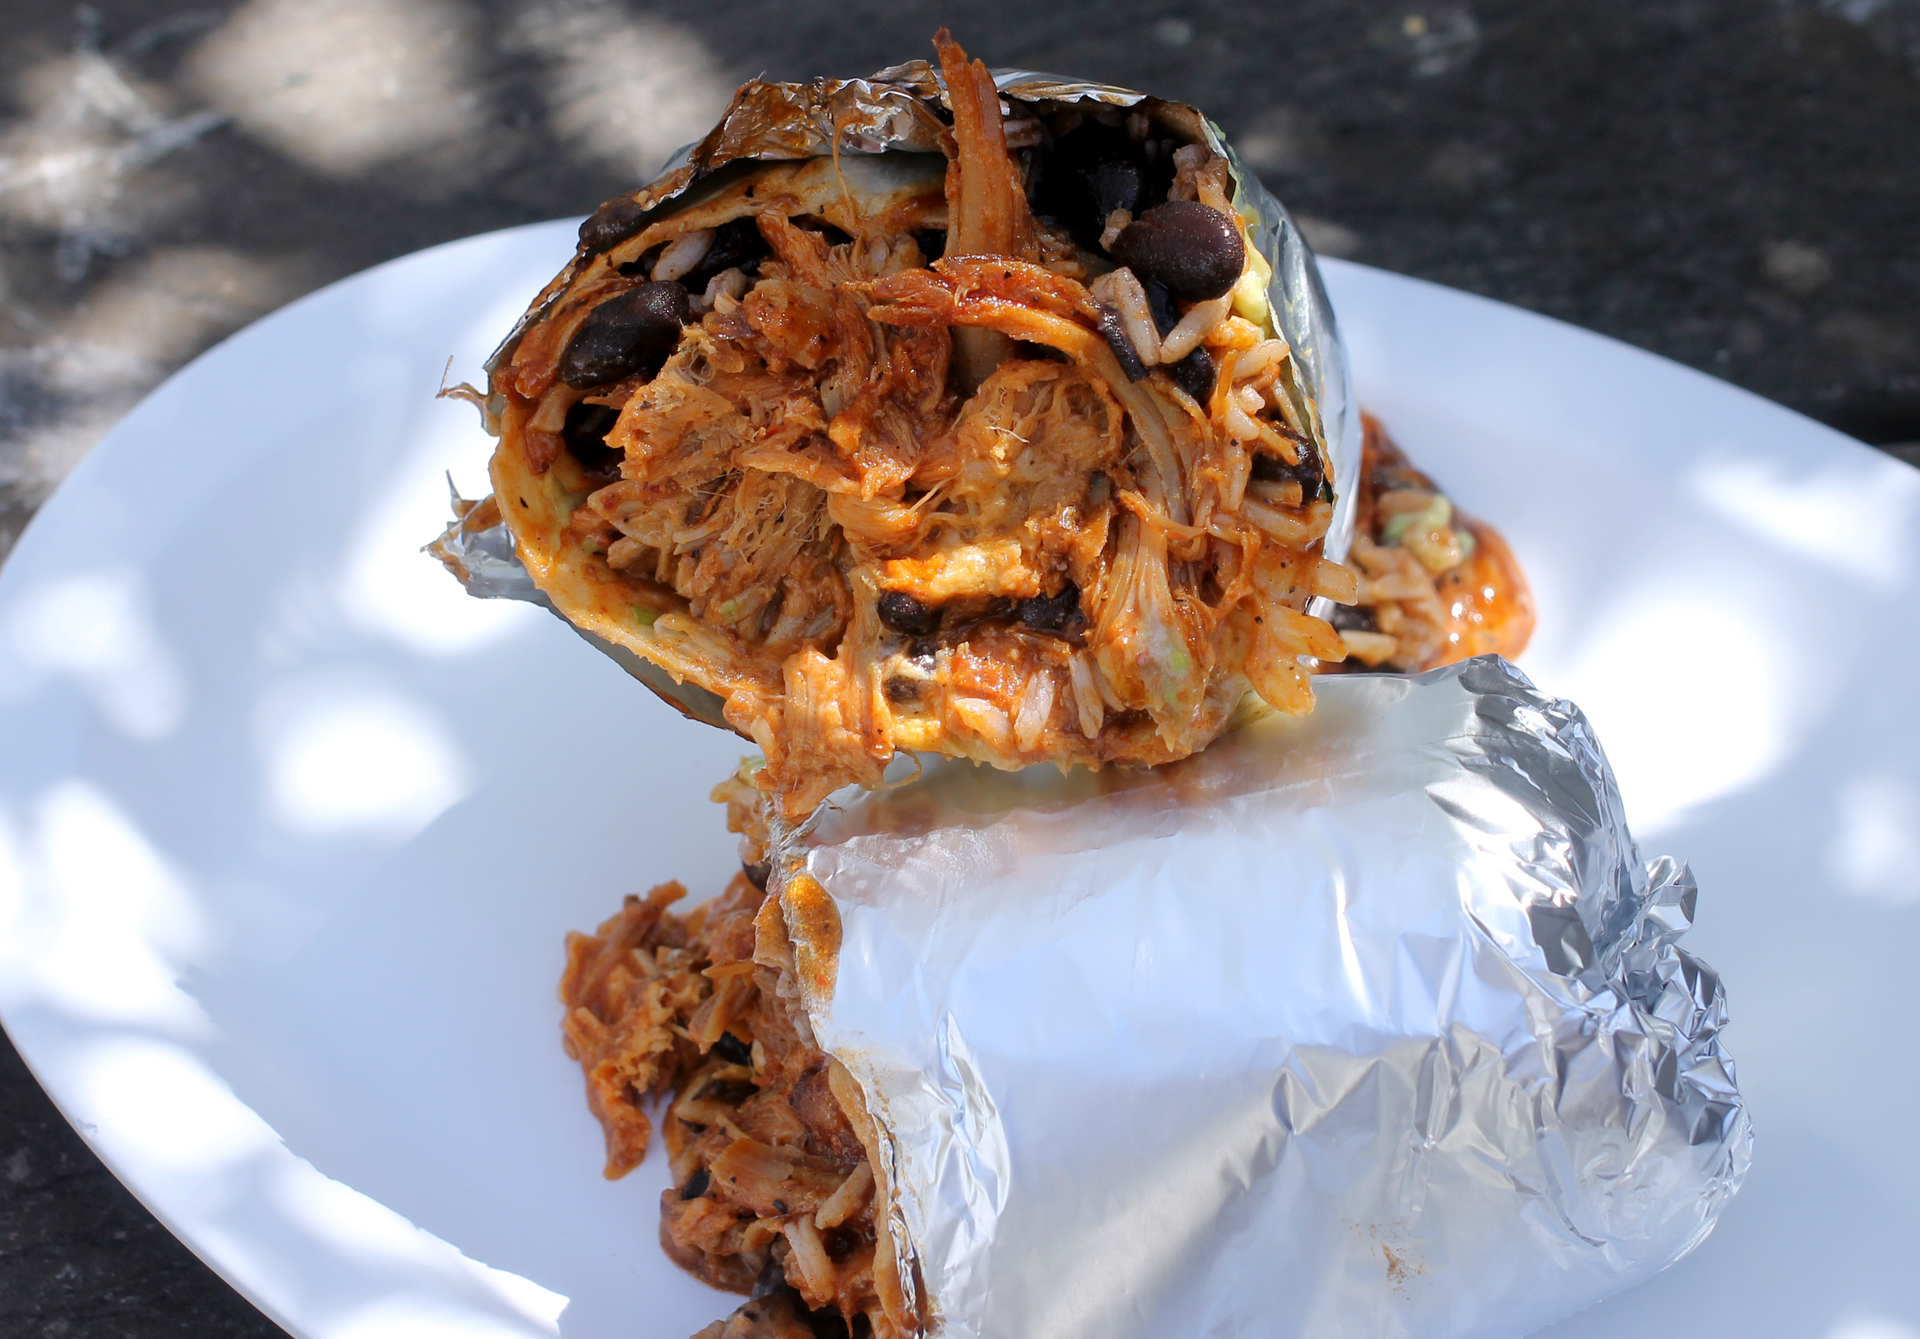 A chile Colorado burrito with pork and black beans from La Mission.